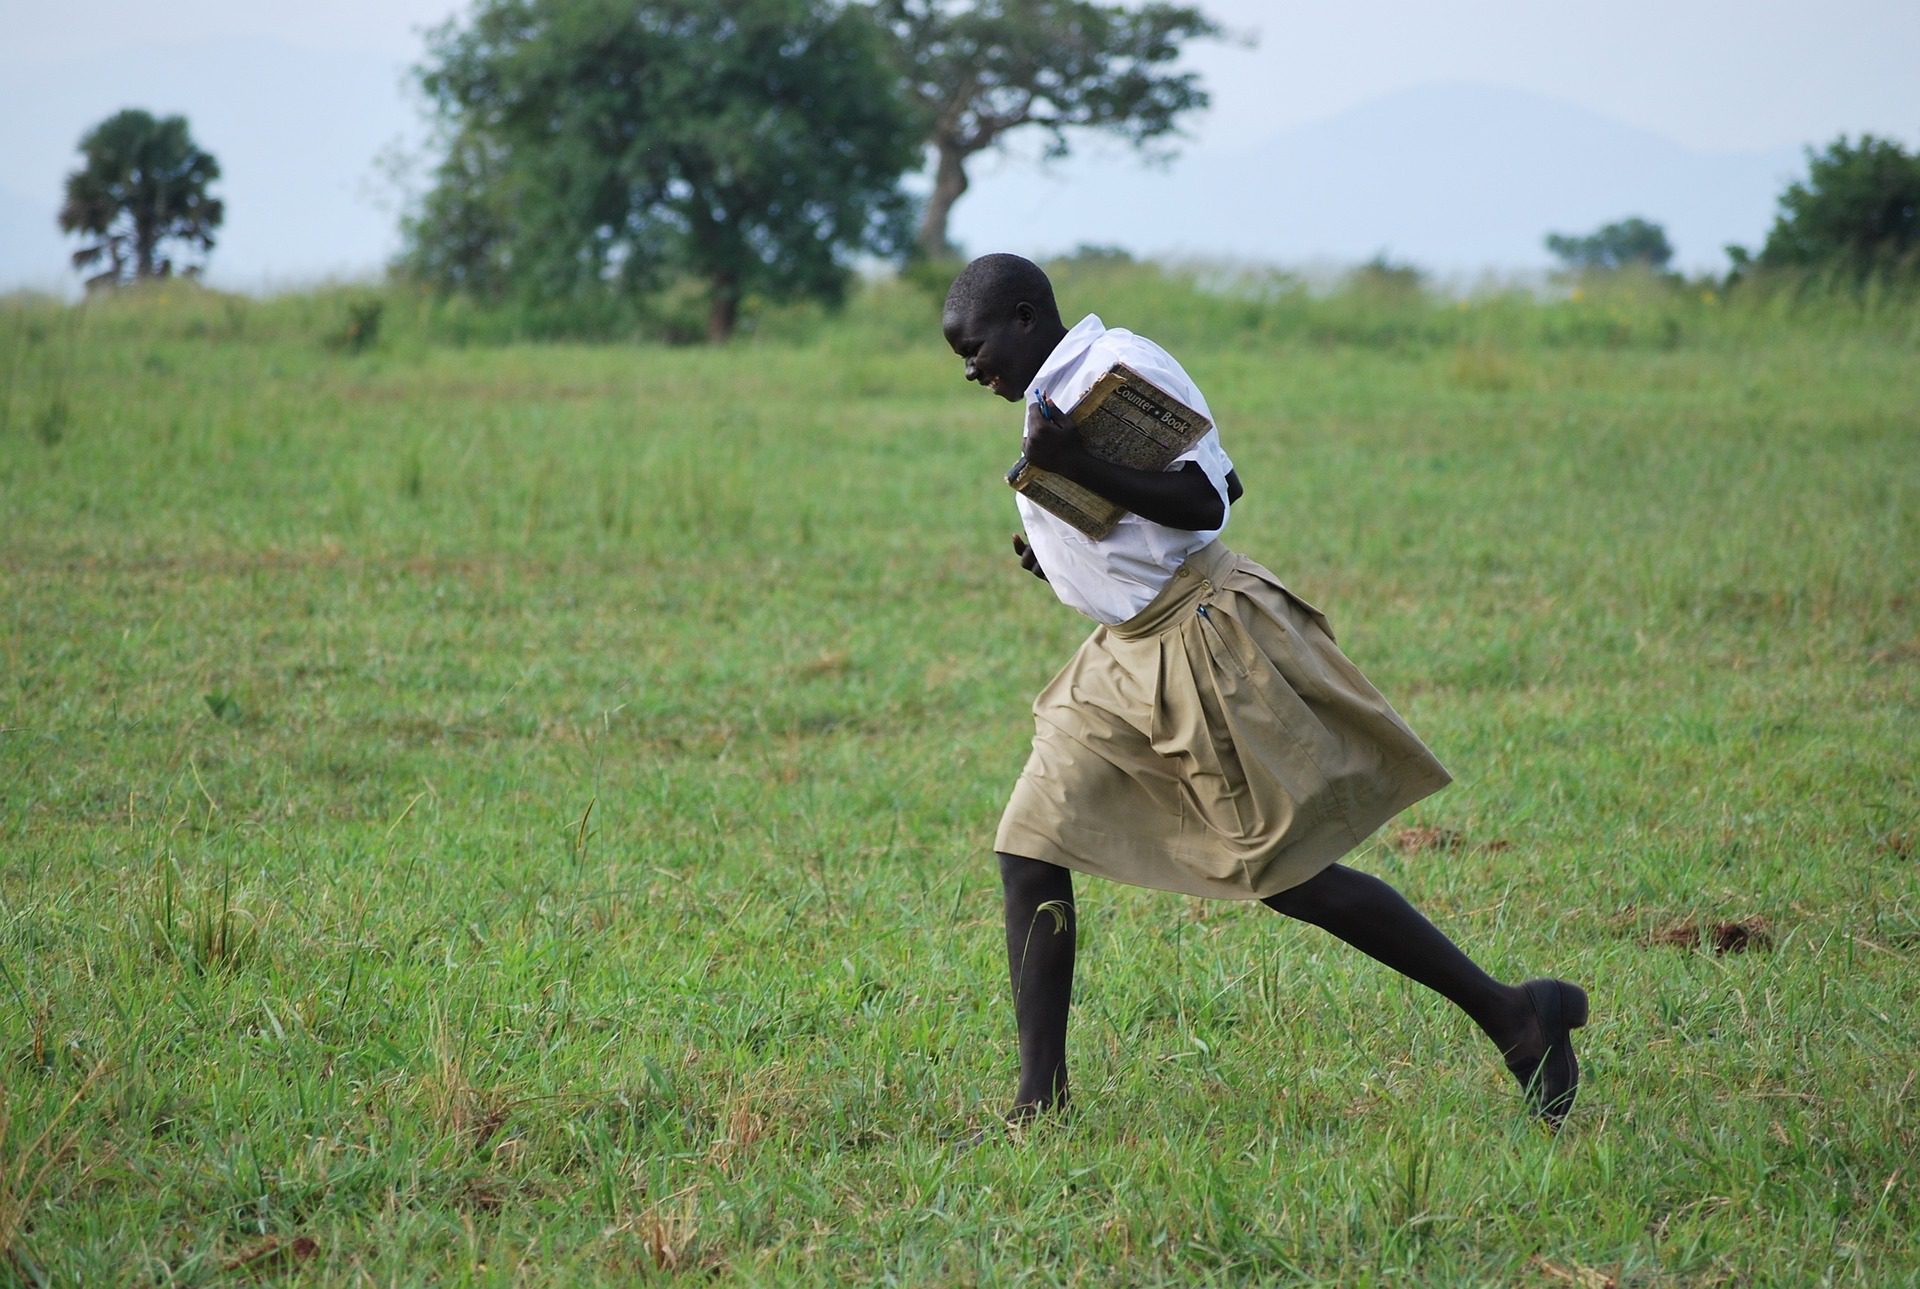 Endline Study of Commercial Sexual Exploitation of Children in Napak District of Karamoja, Uganda